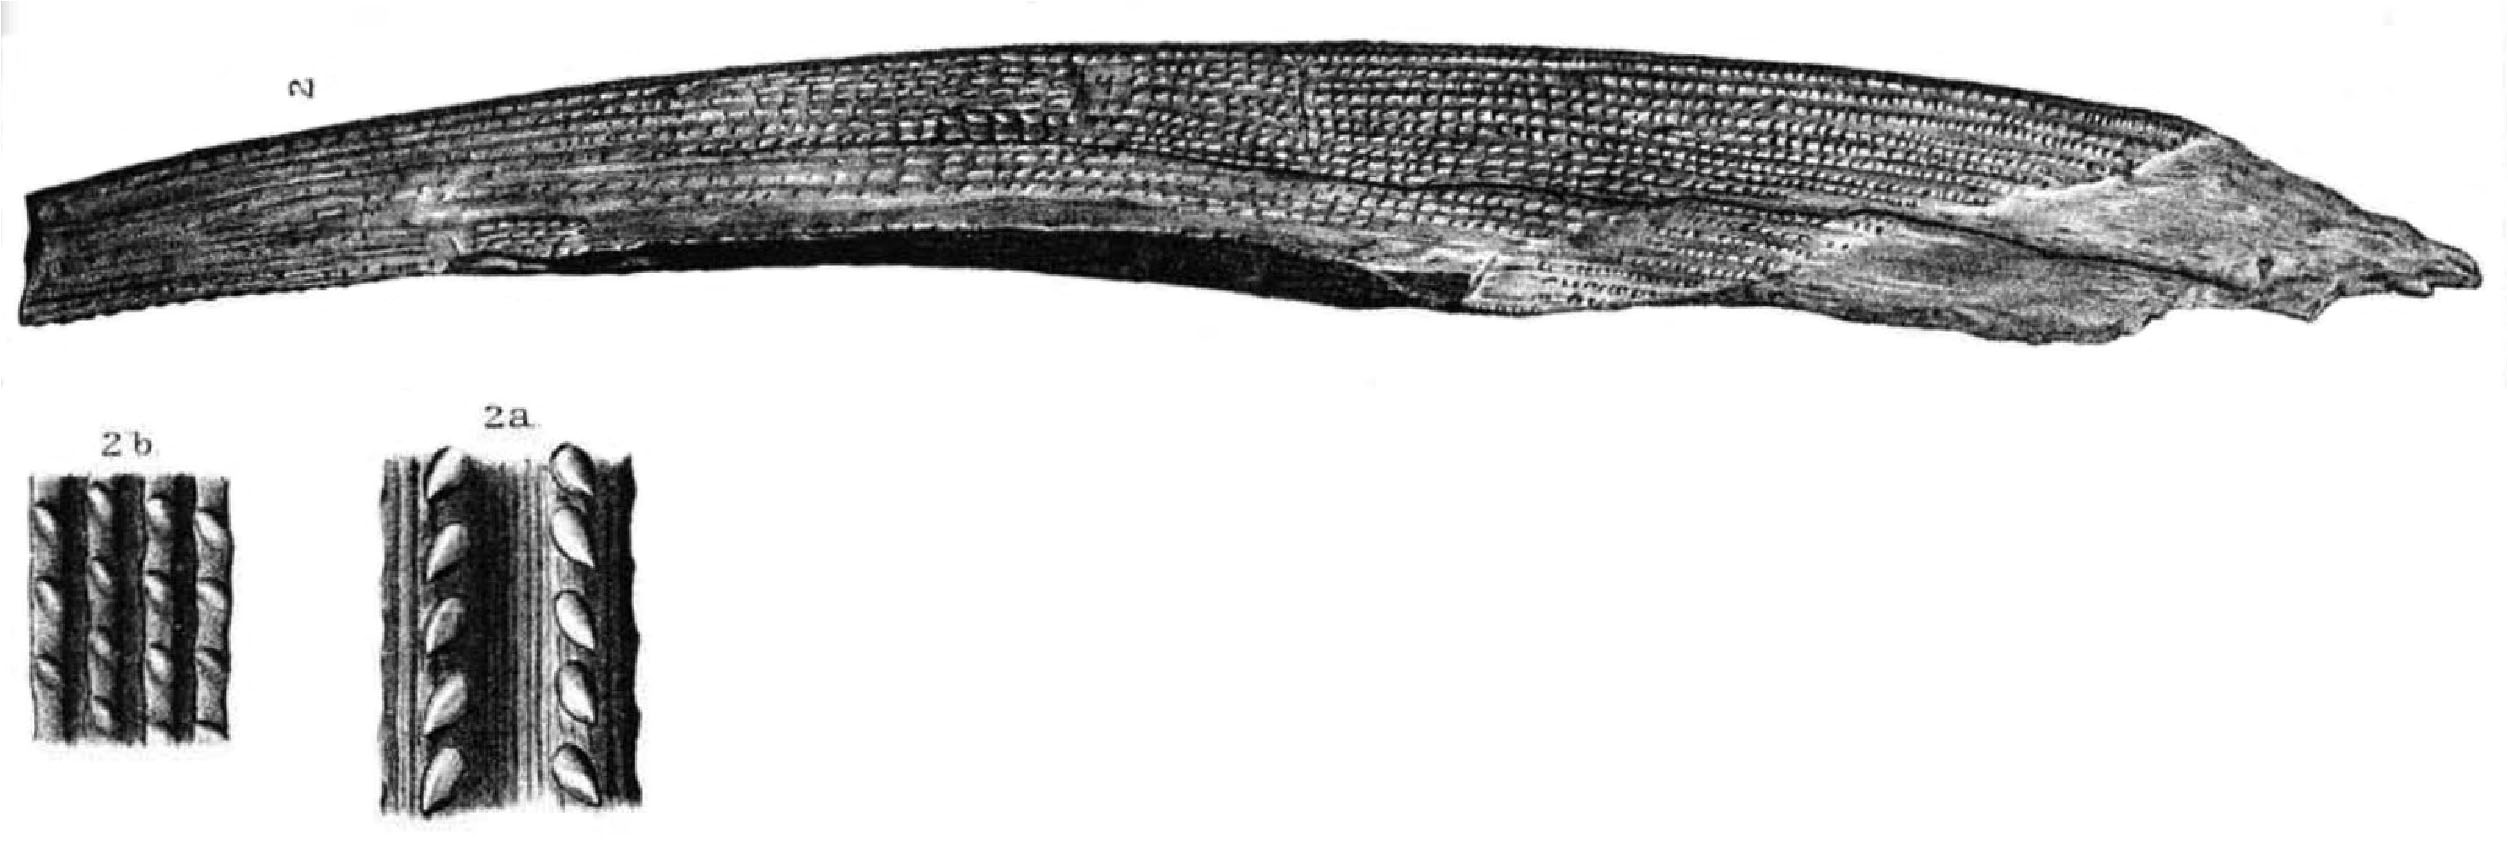 Ctenacanthus from Newberry